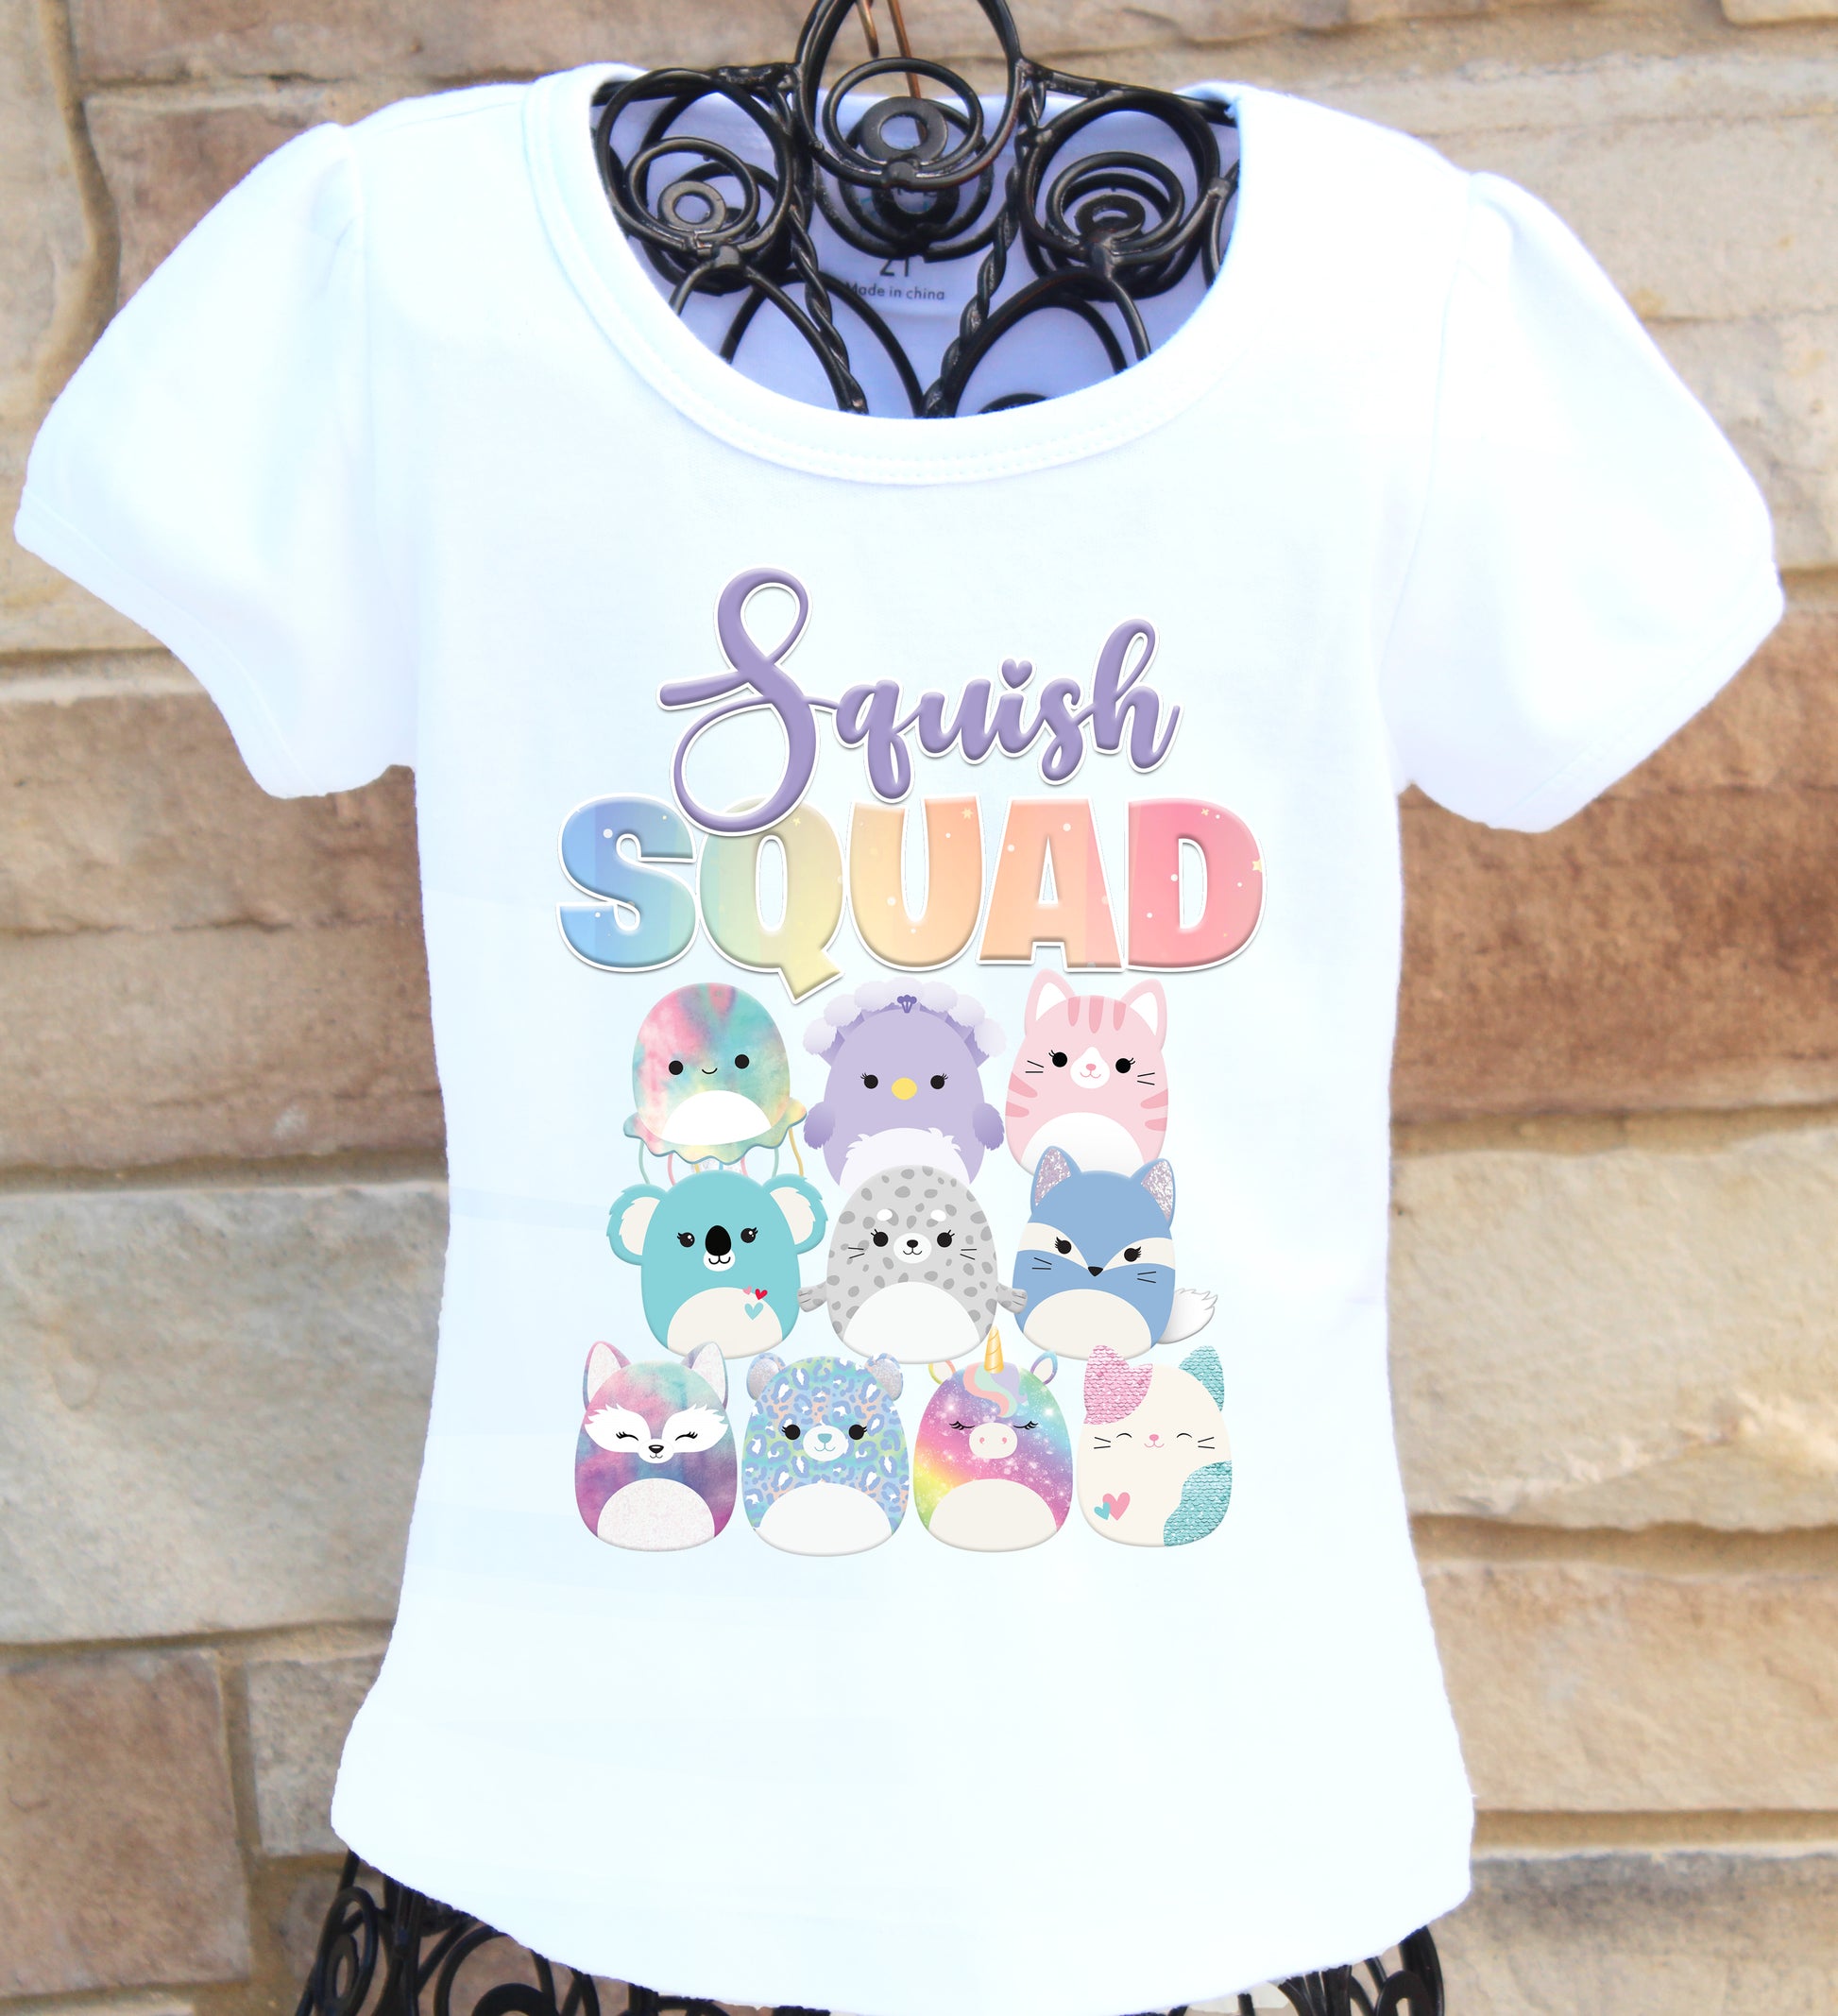 Squish squad shirt